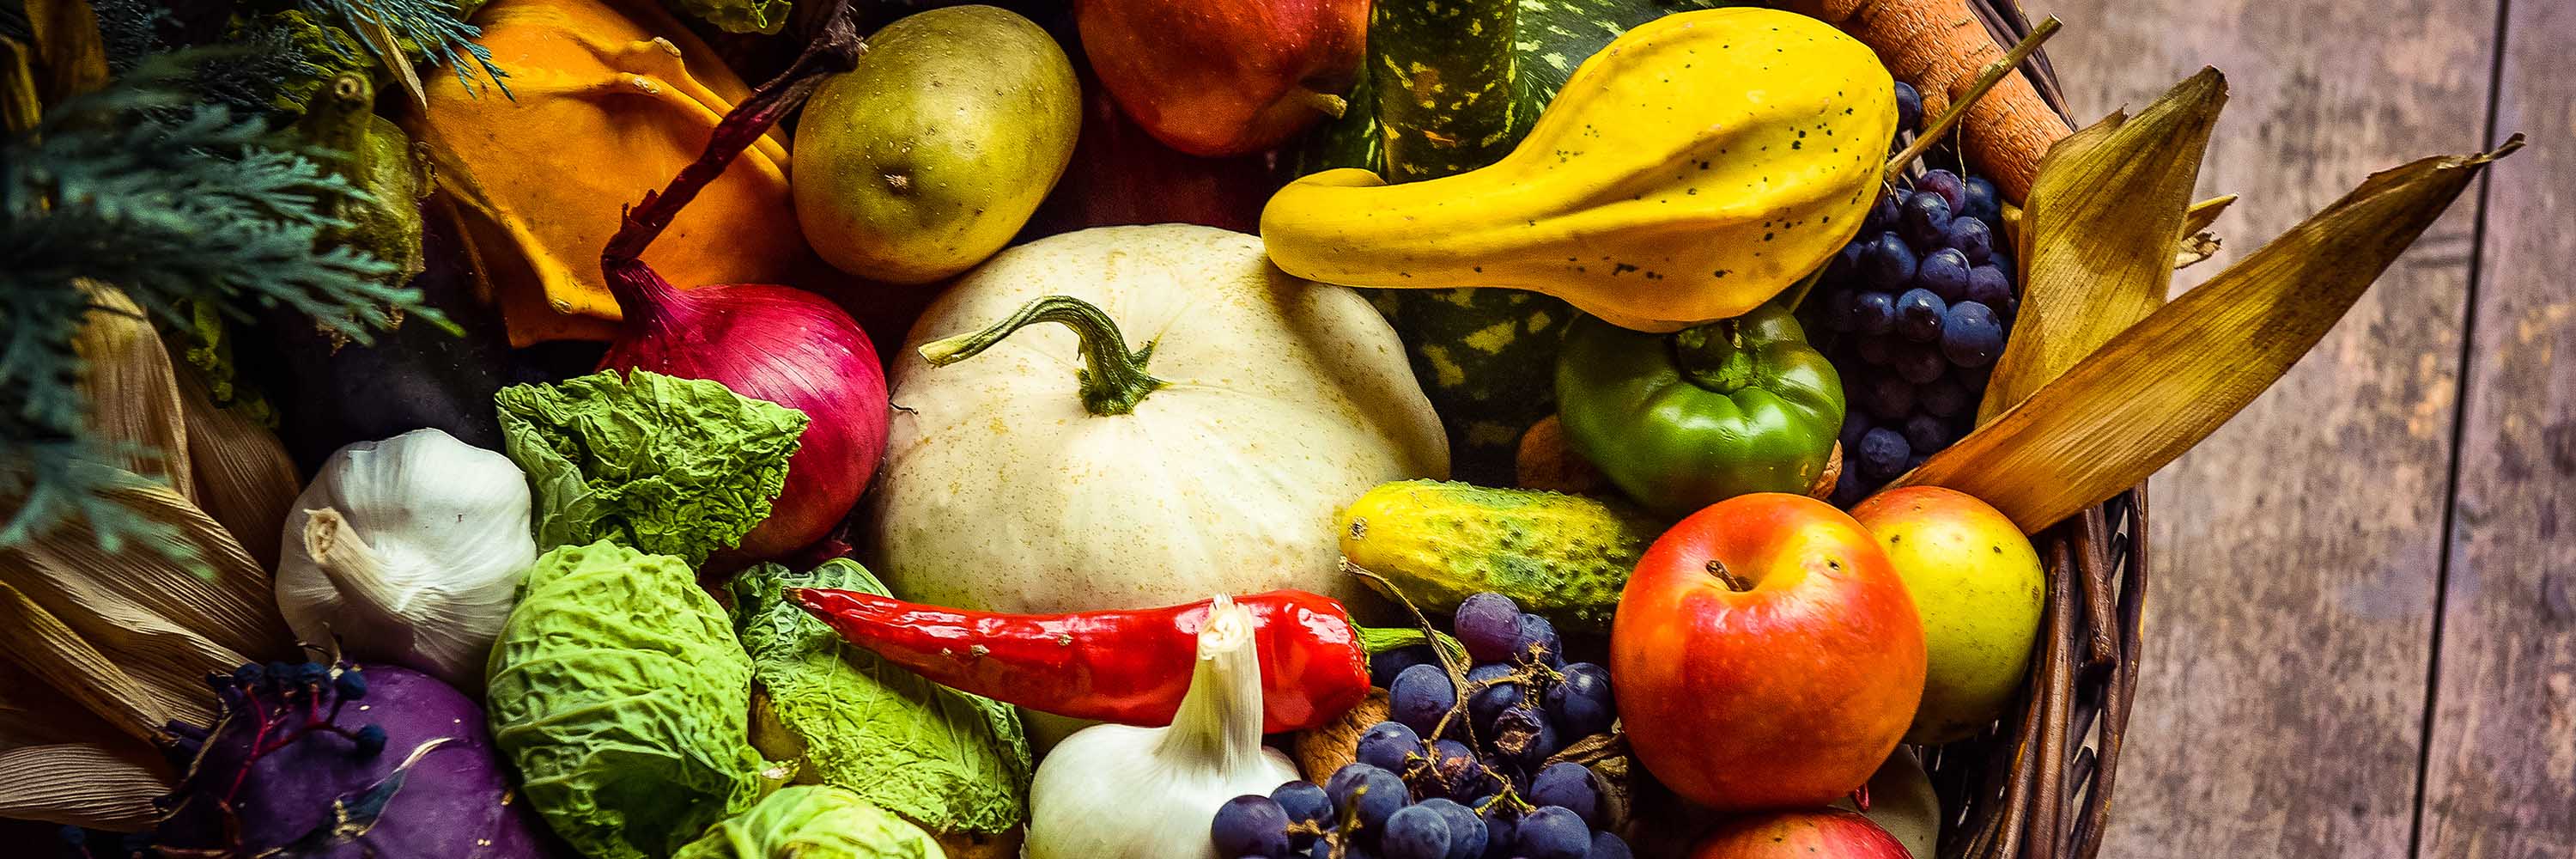 Food,Green,Ingredient,Fruit,Natural foods,Staple food,Cuisine